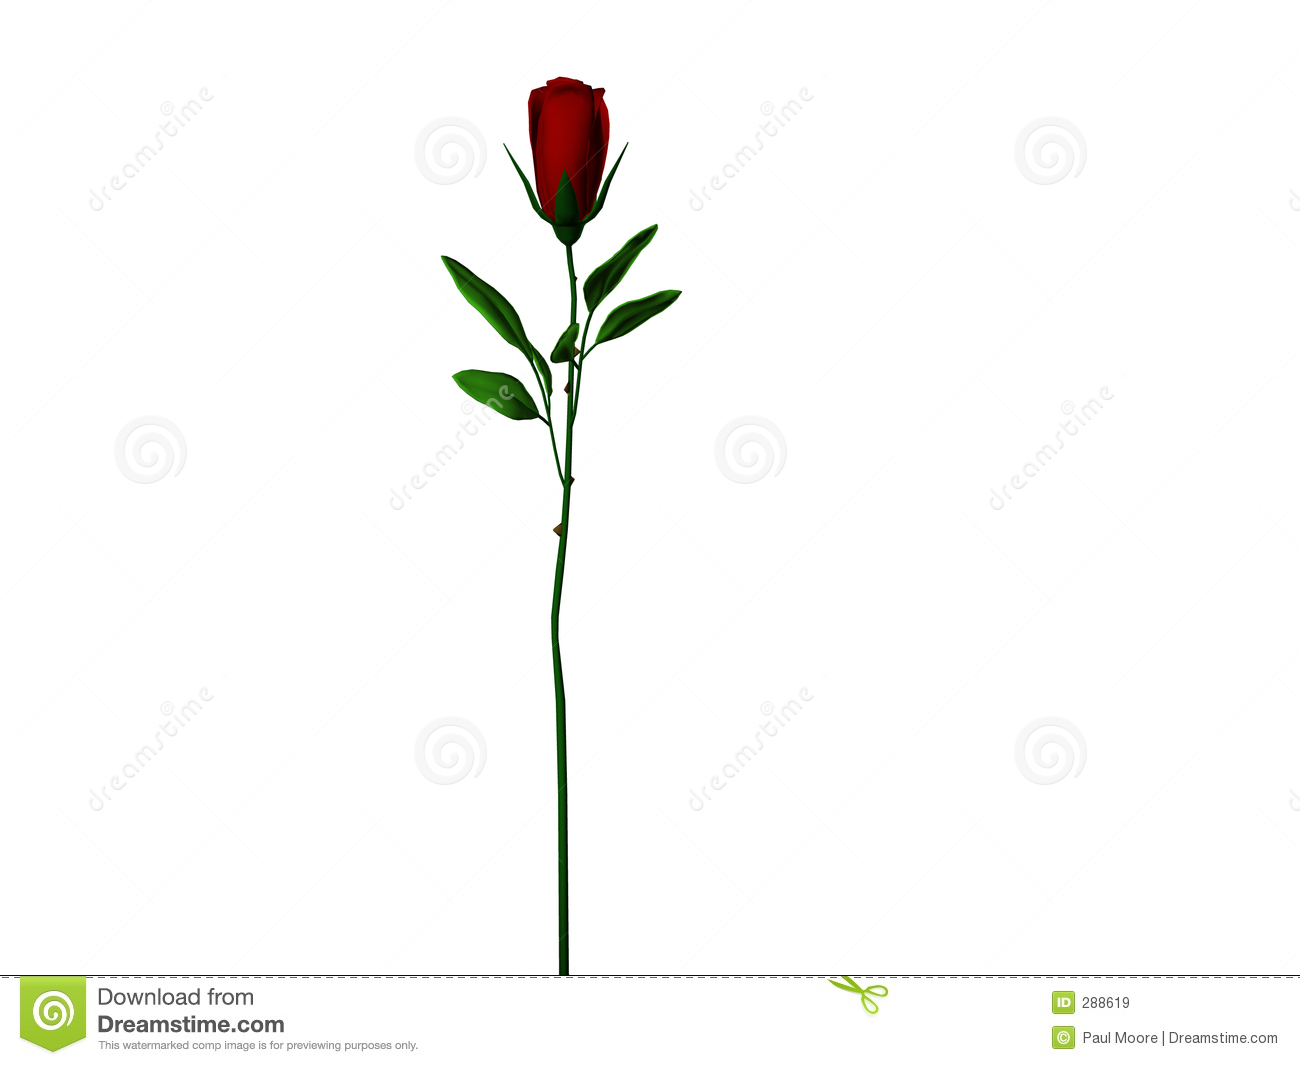 Dark Red Long Stem Rose Royalty Free Stock Images   Image  288619